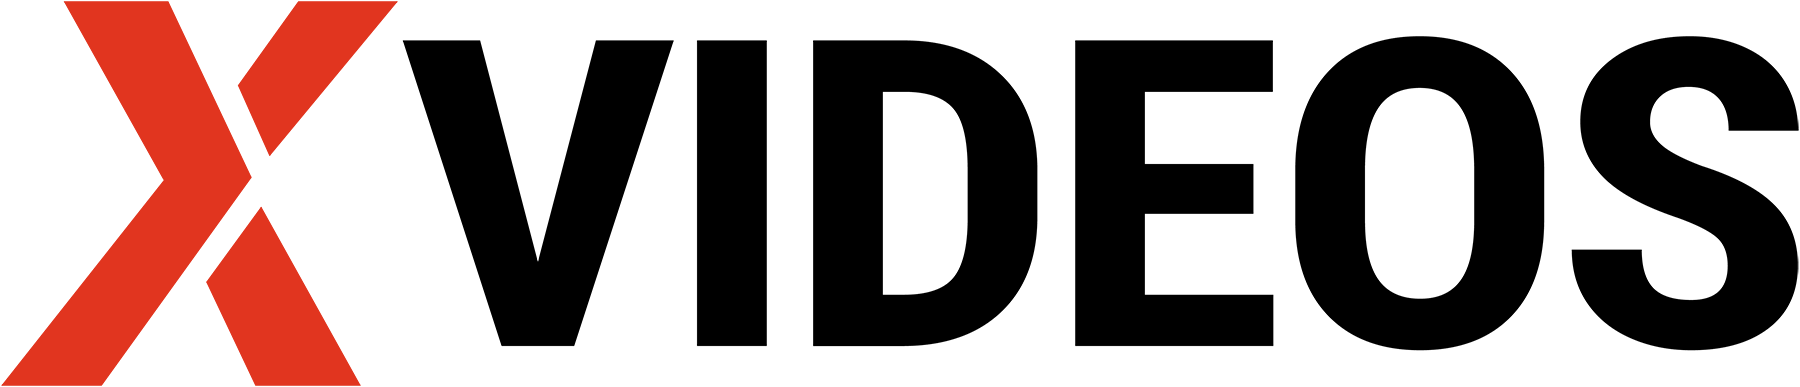 Xvideos logo